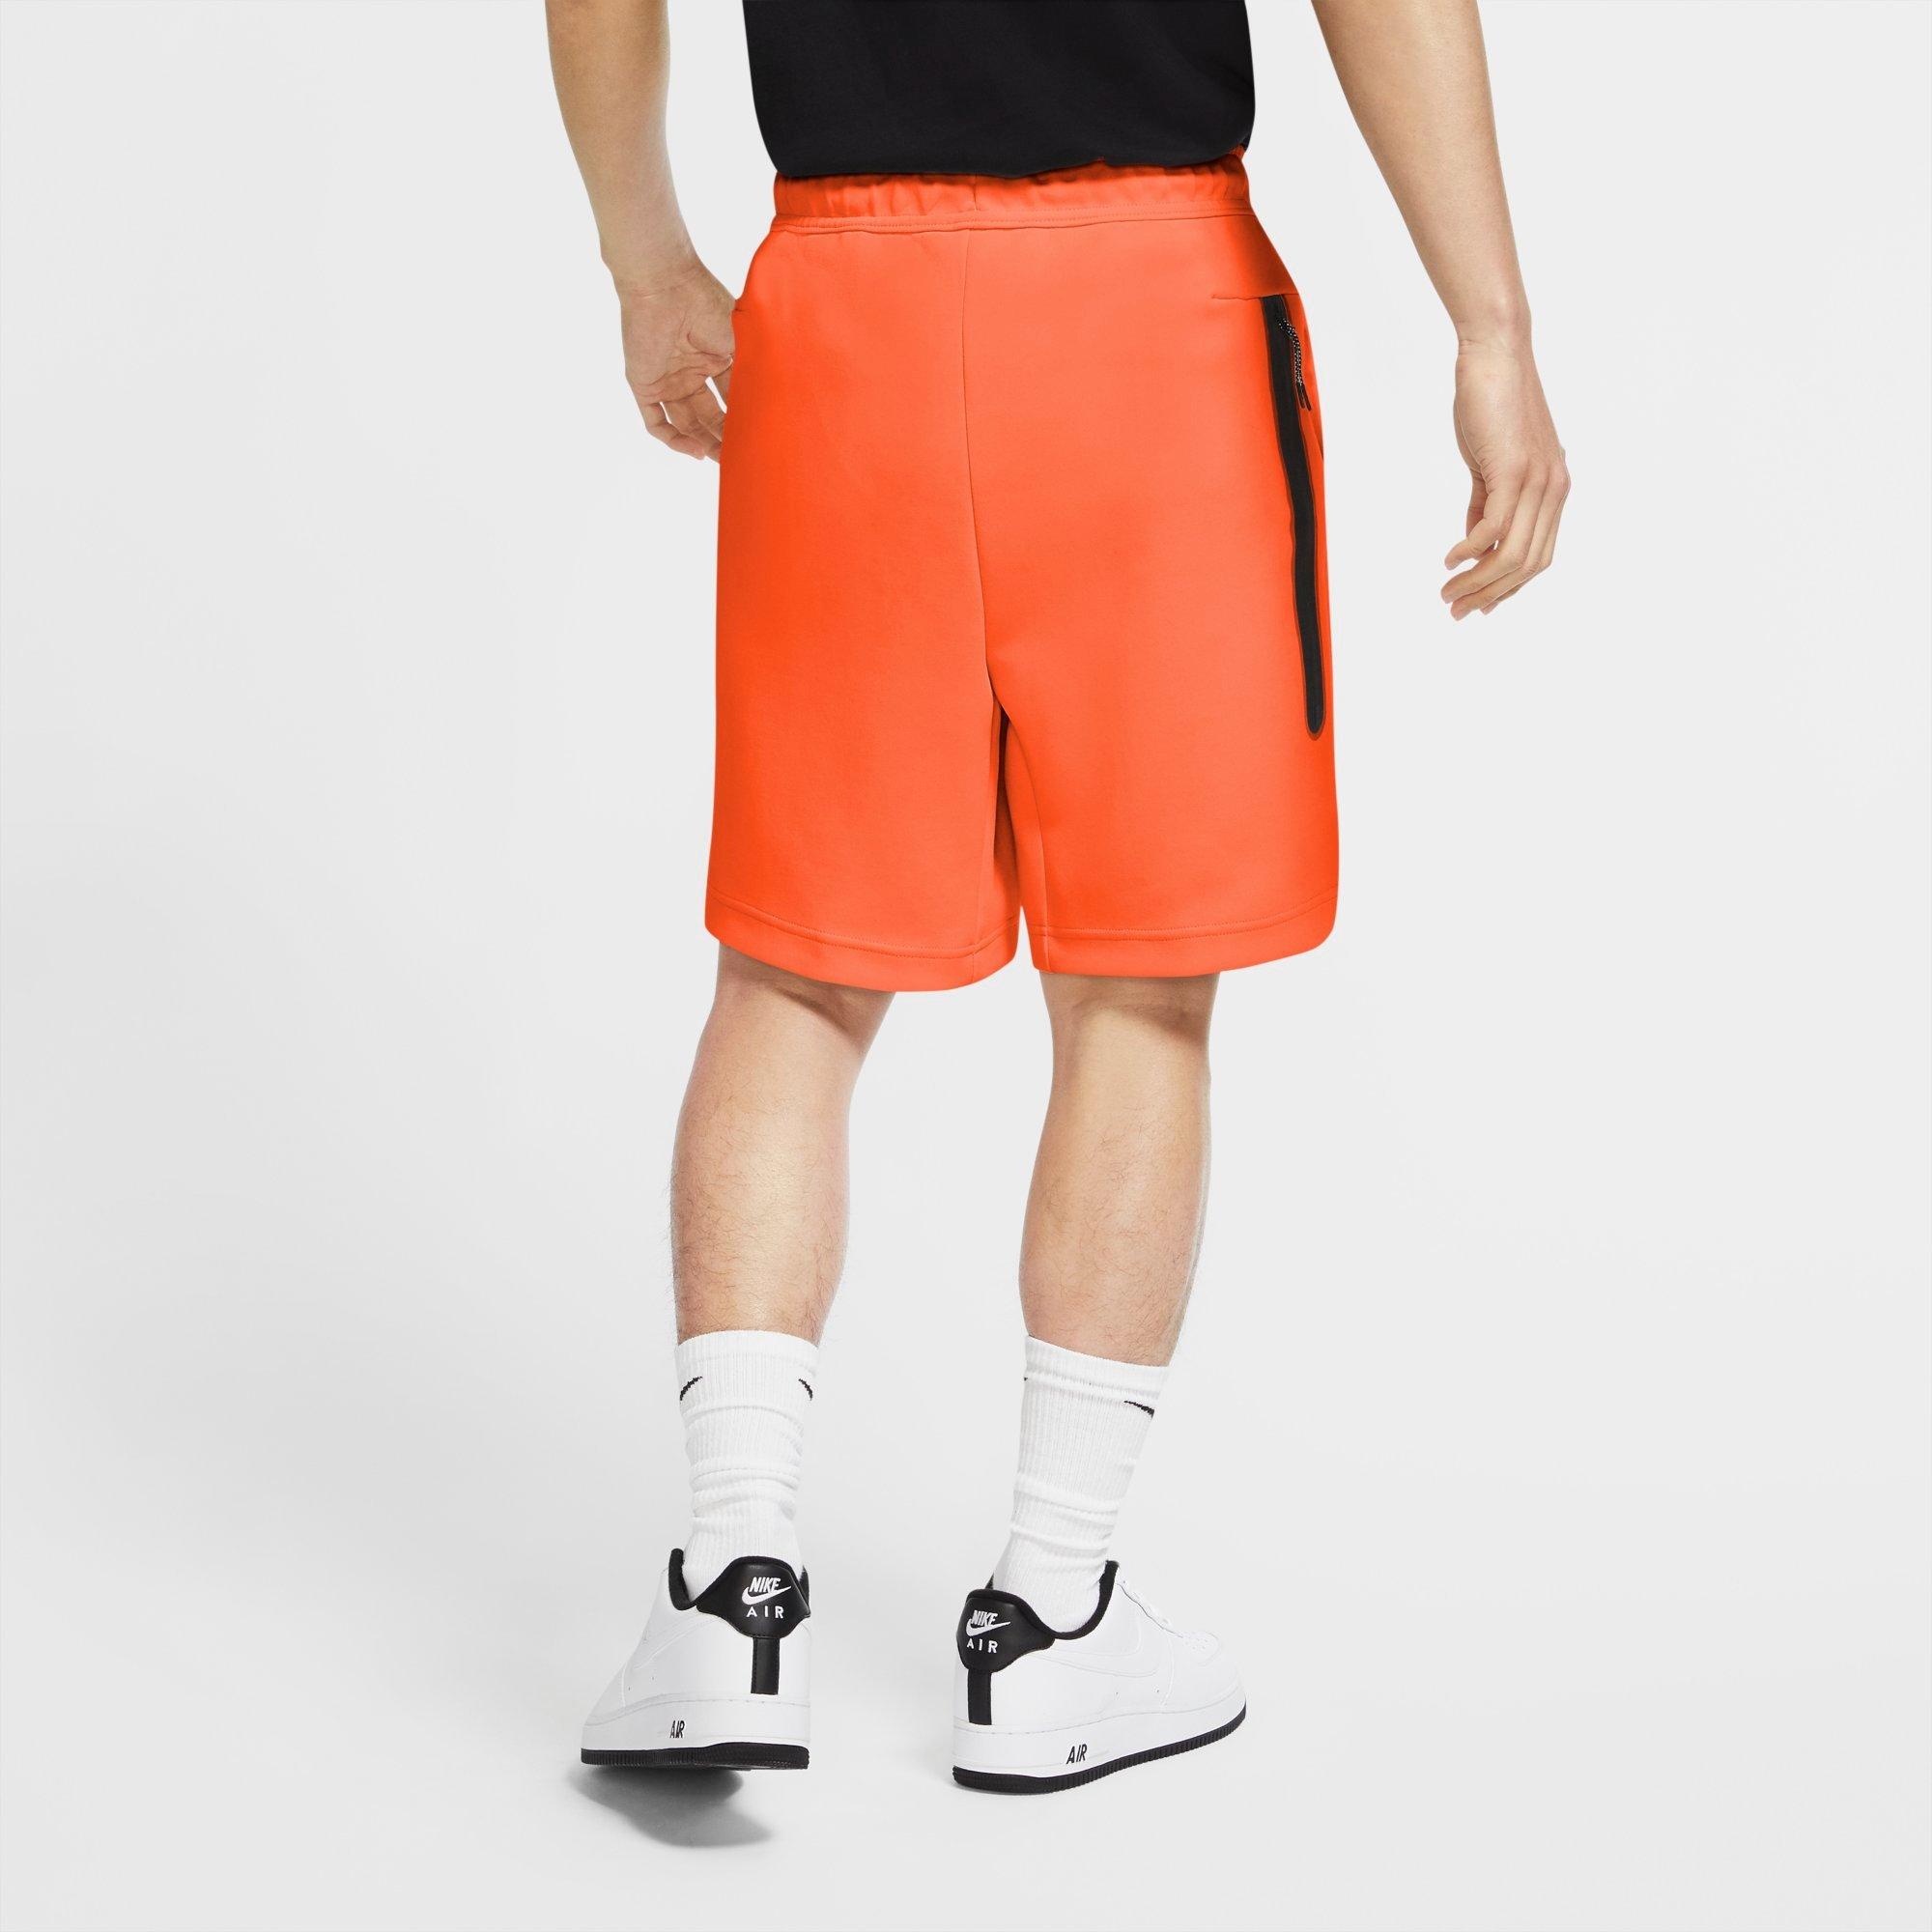 orange nike fleece shorts